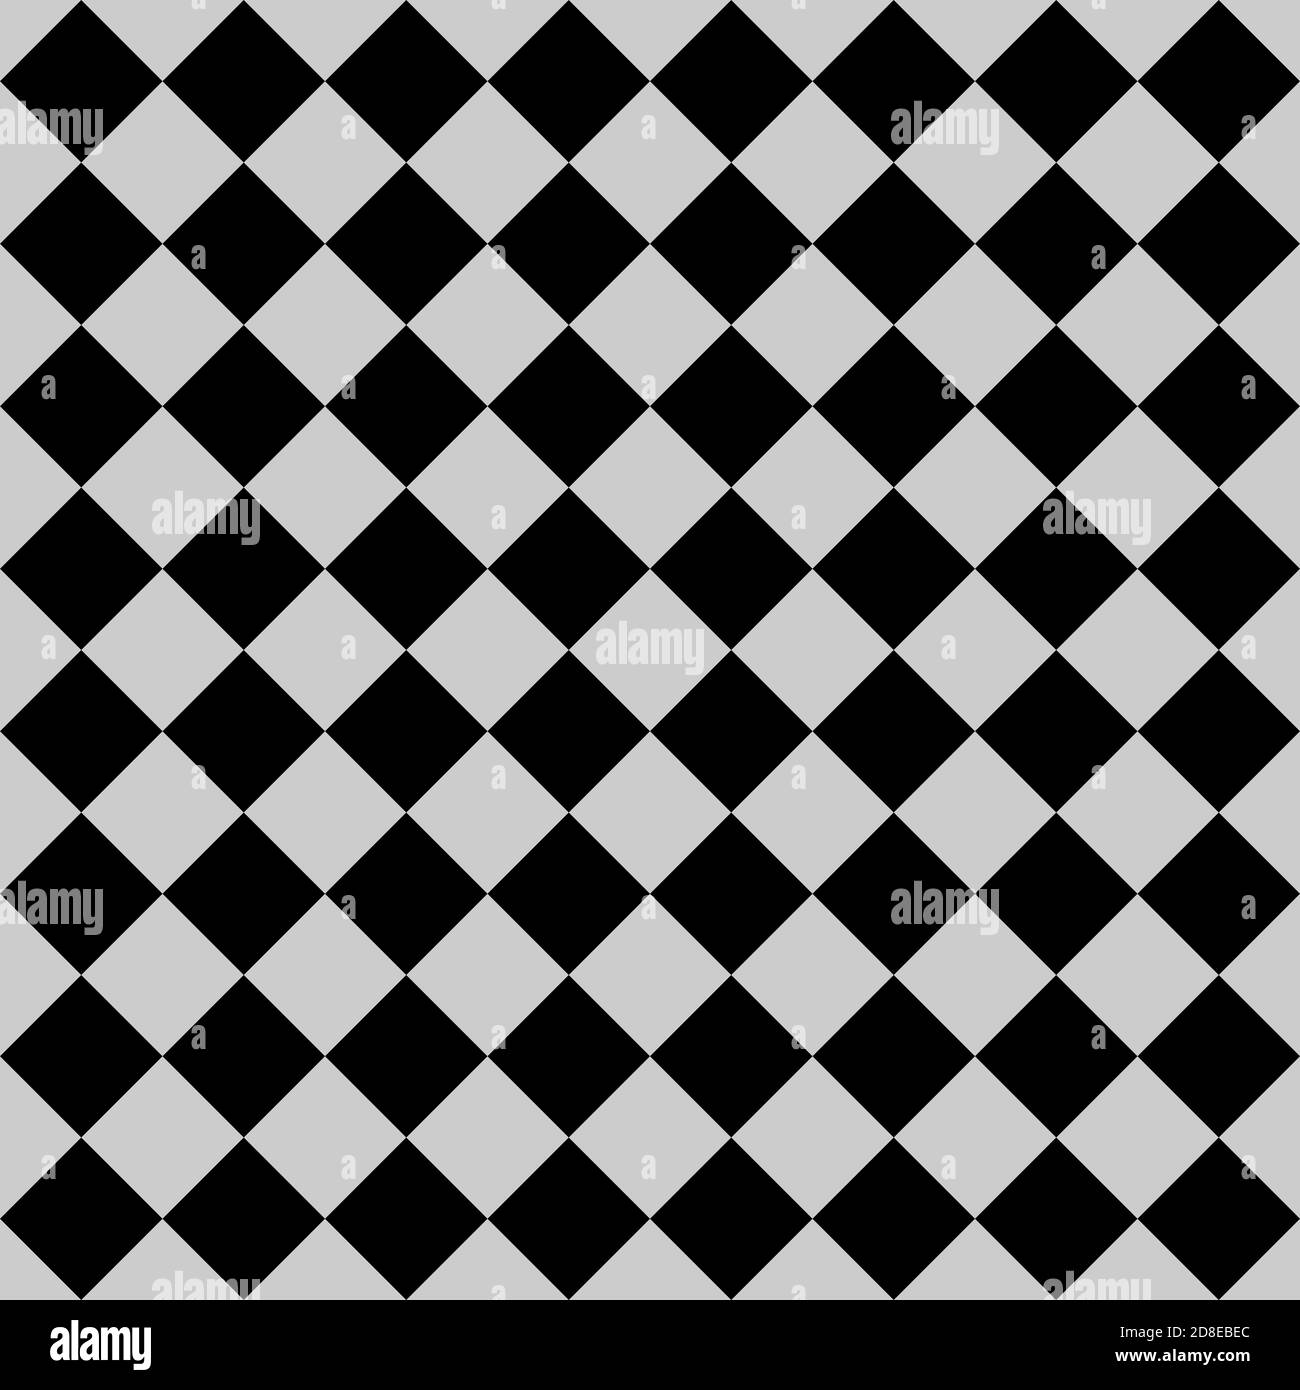 Chessboard. Black chessboard illustration on the grey background. Stock Photo